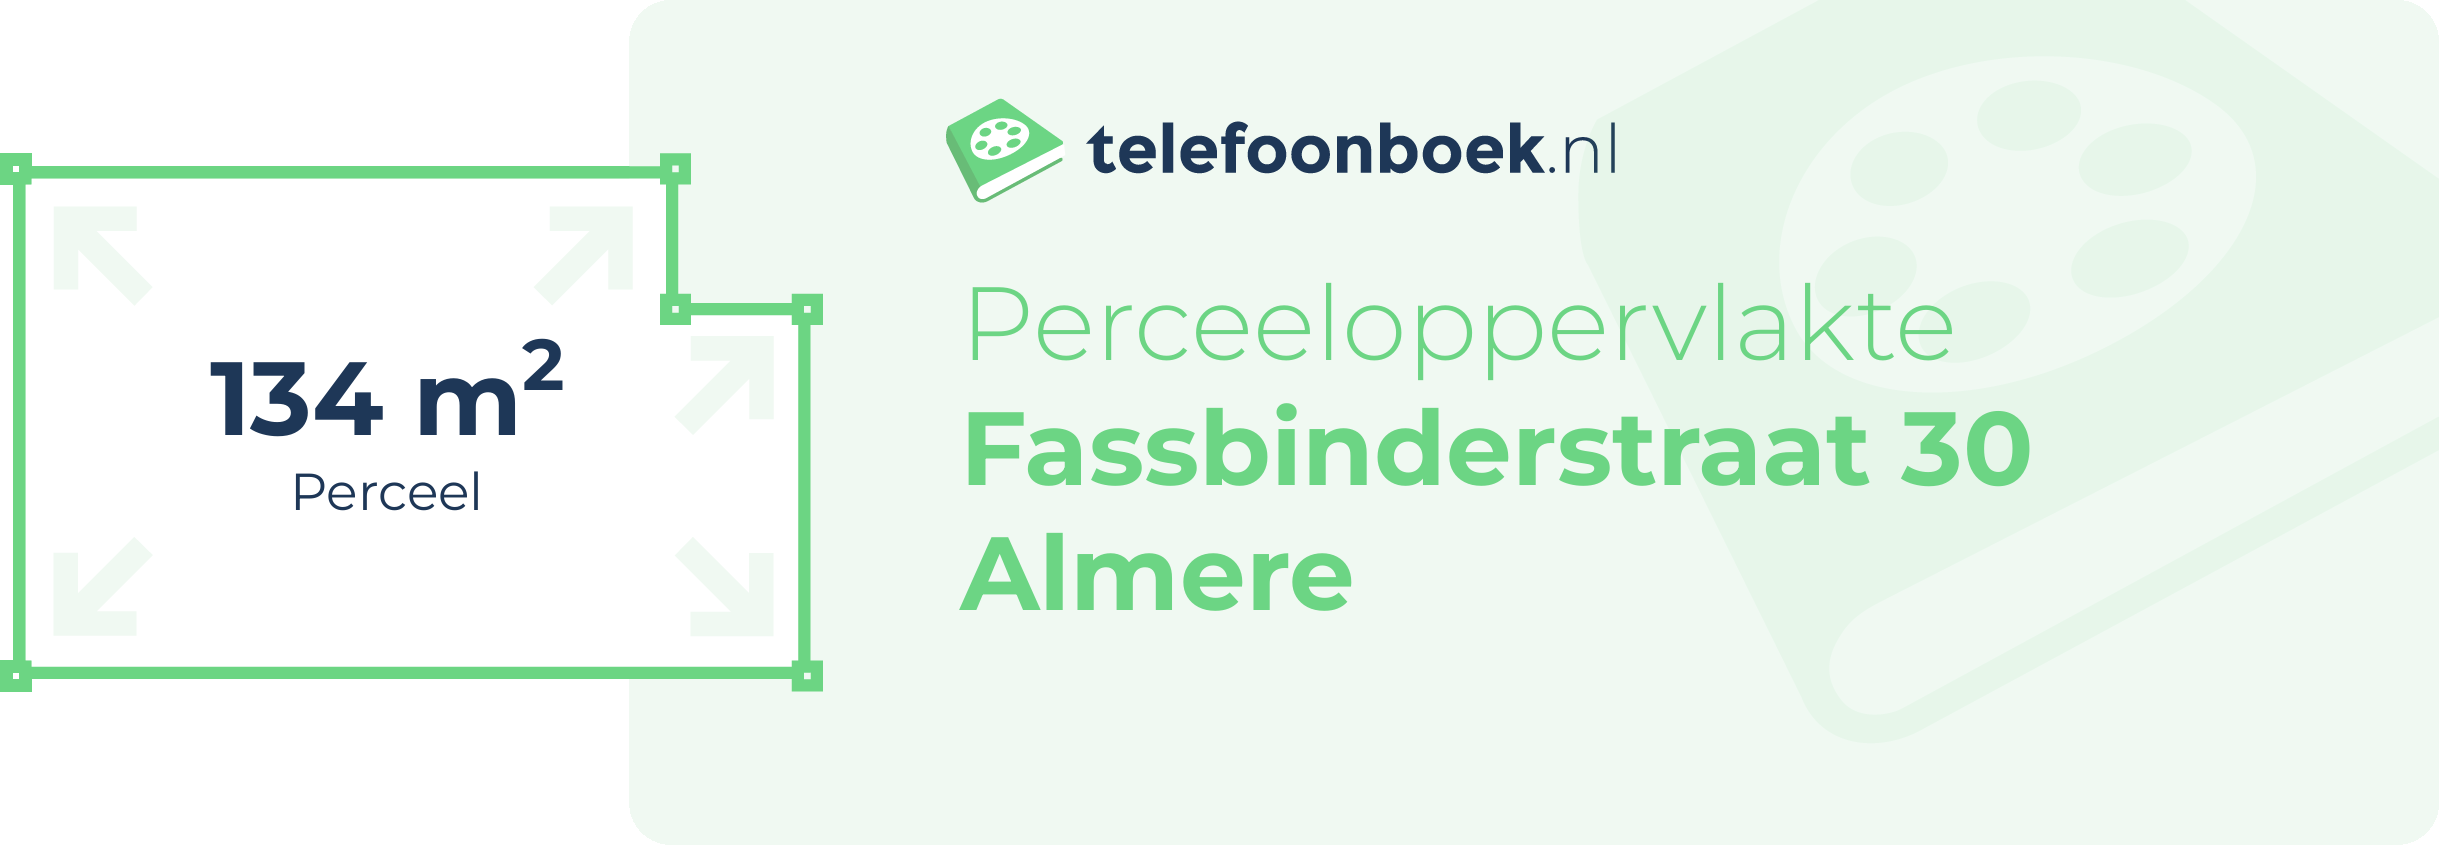 Perceeloppervlakte Fassbinderstraat 30 Almere